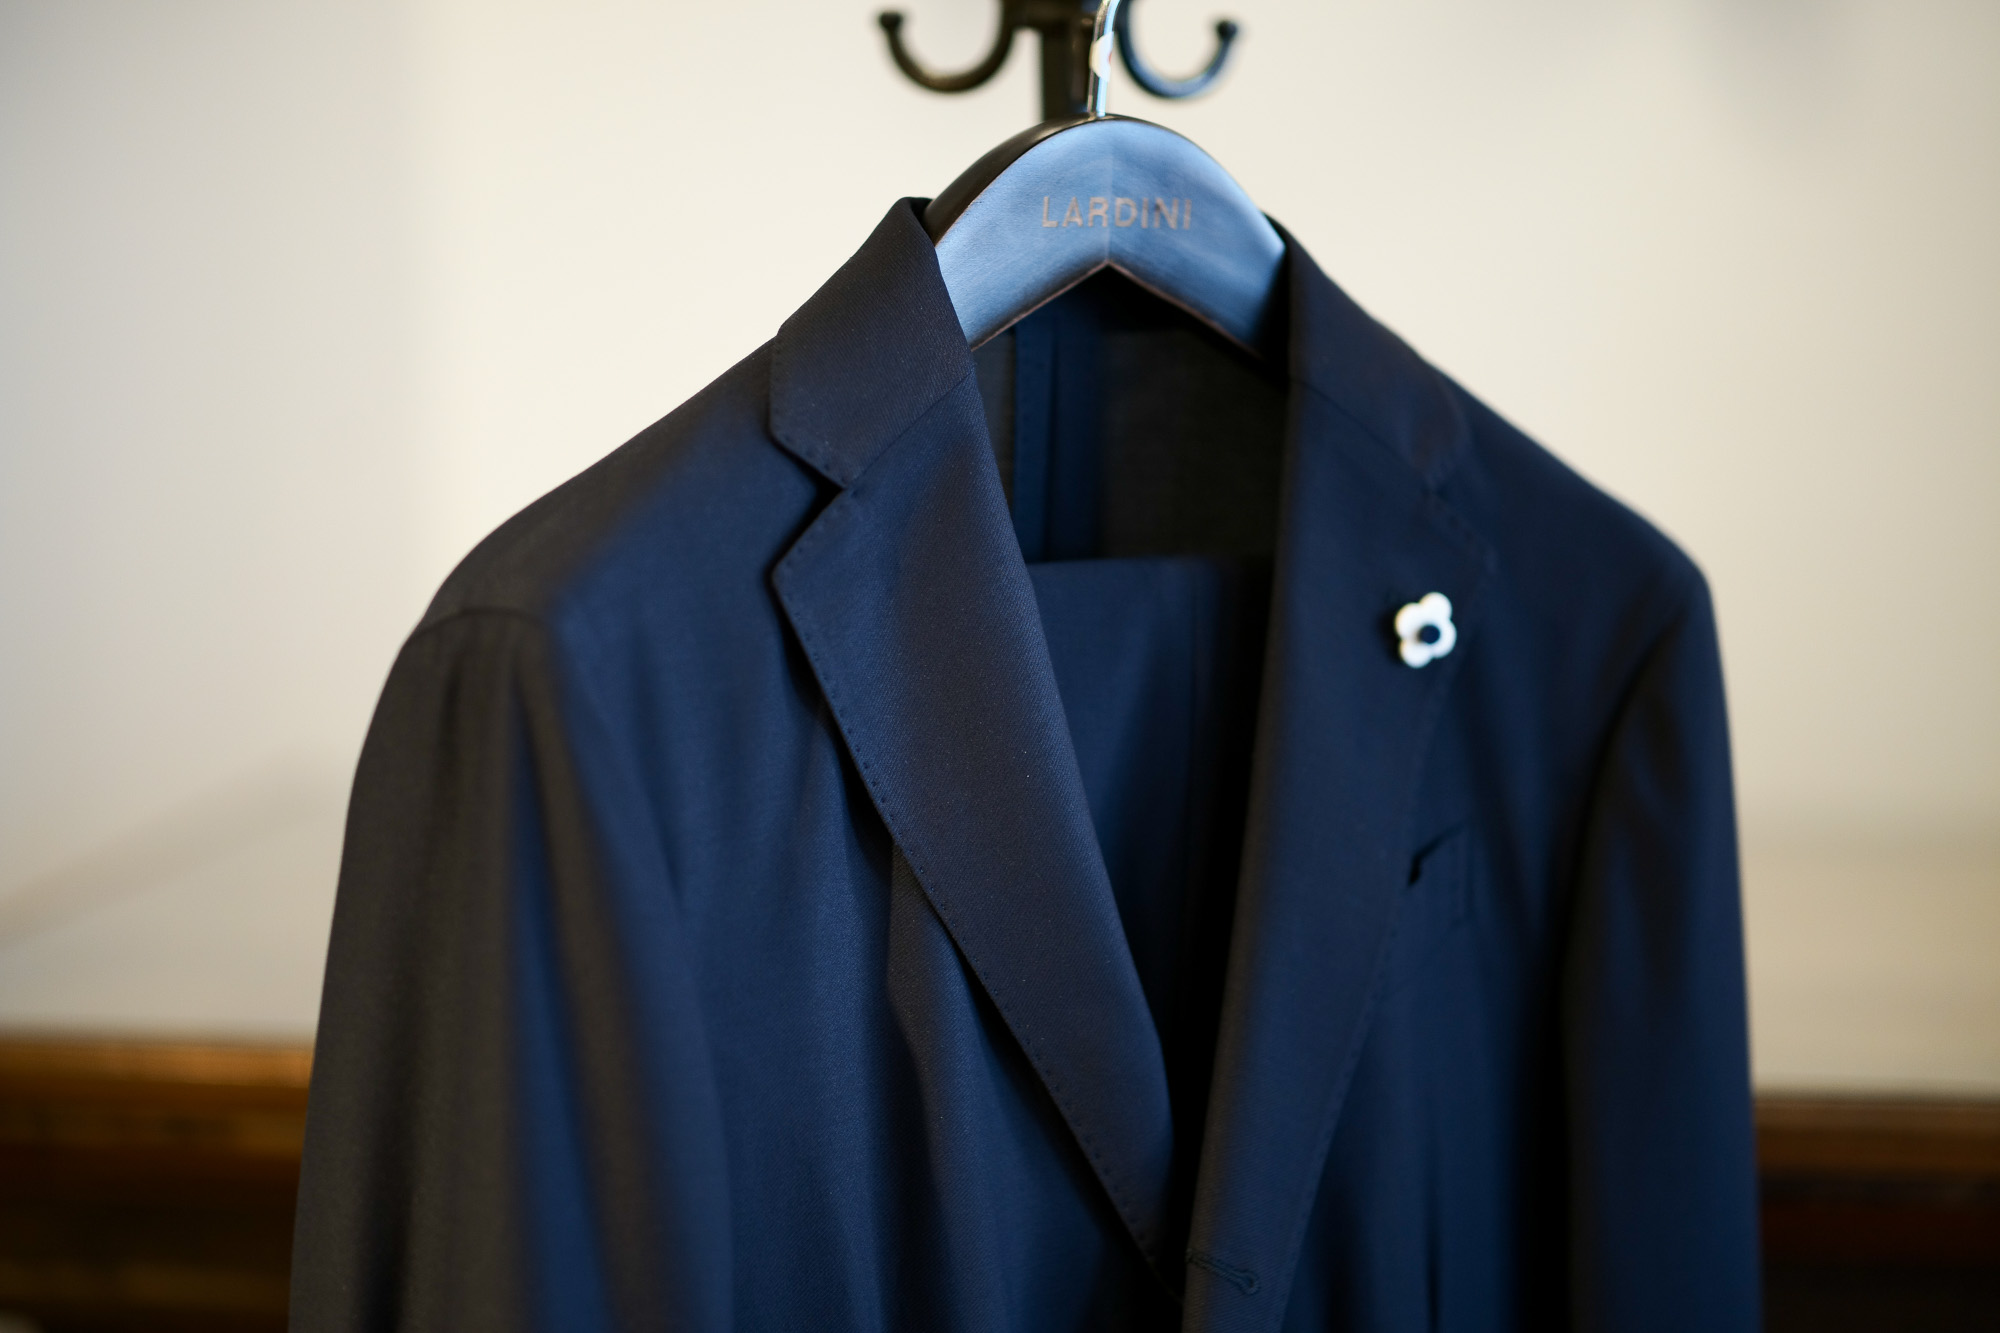 LARDINI (ラルディーニ) EASY WEAR (イージーウエア) Pakkaburu Suit パッカブル サマージャージ スーツ NAVY (ネイビー・1) Made in italy (イタリア製) 2020 春夏新作 愛知 名古屋 altoediritto アルトエデリット 